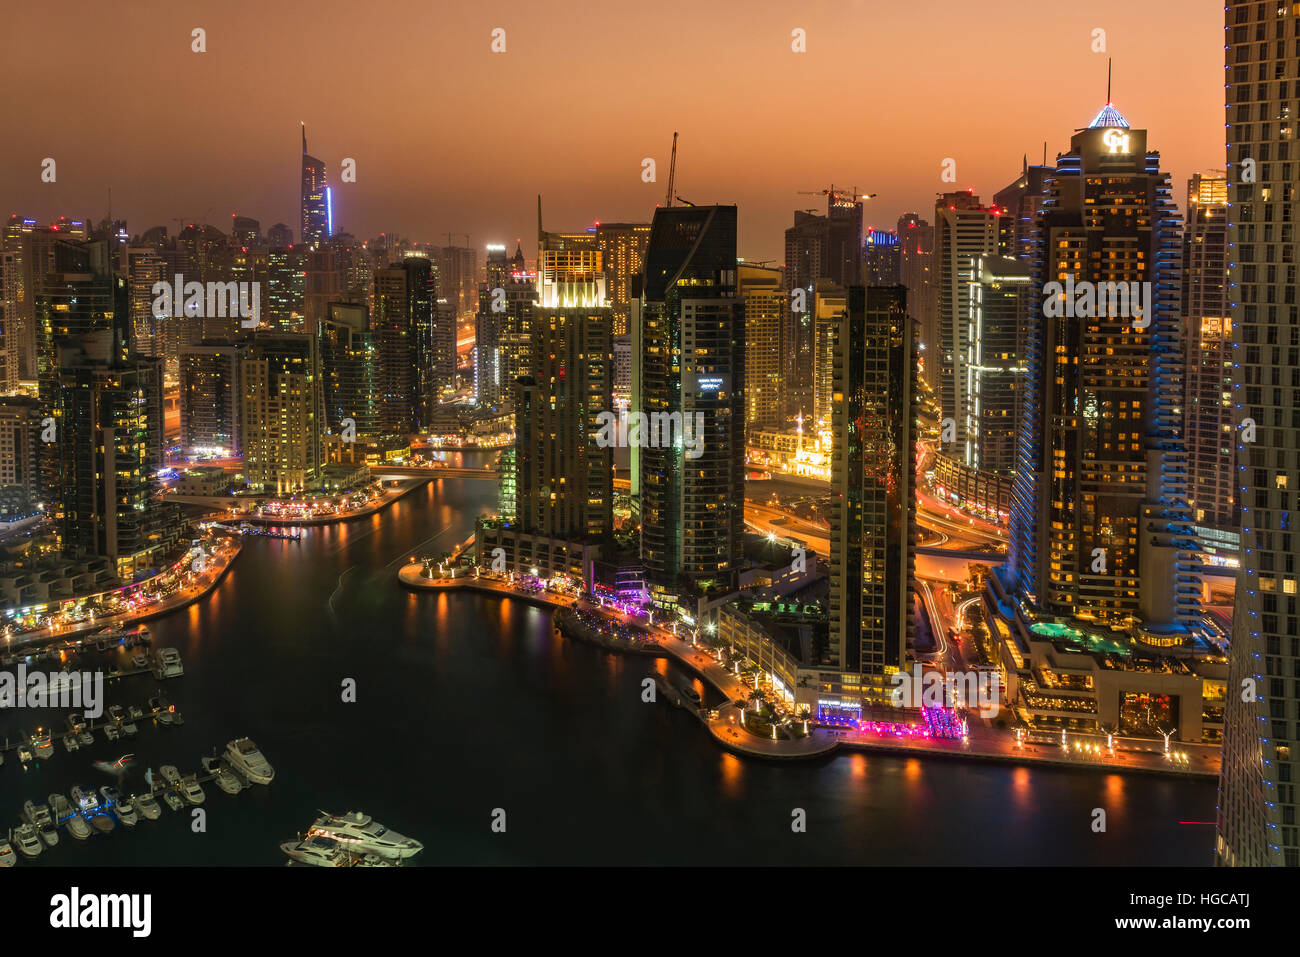 Top view of night skyline of Dubai Marina residential area, Dubai, United Arab Emirates Stock Photo